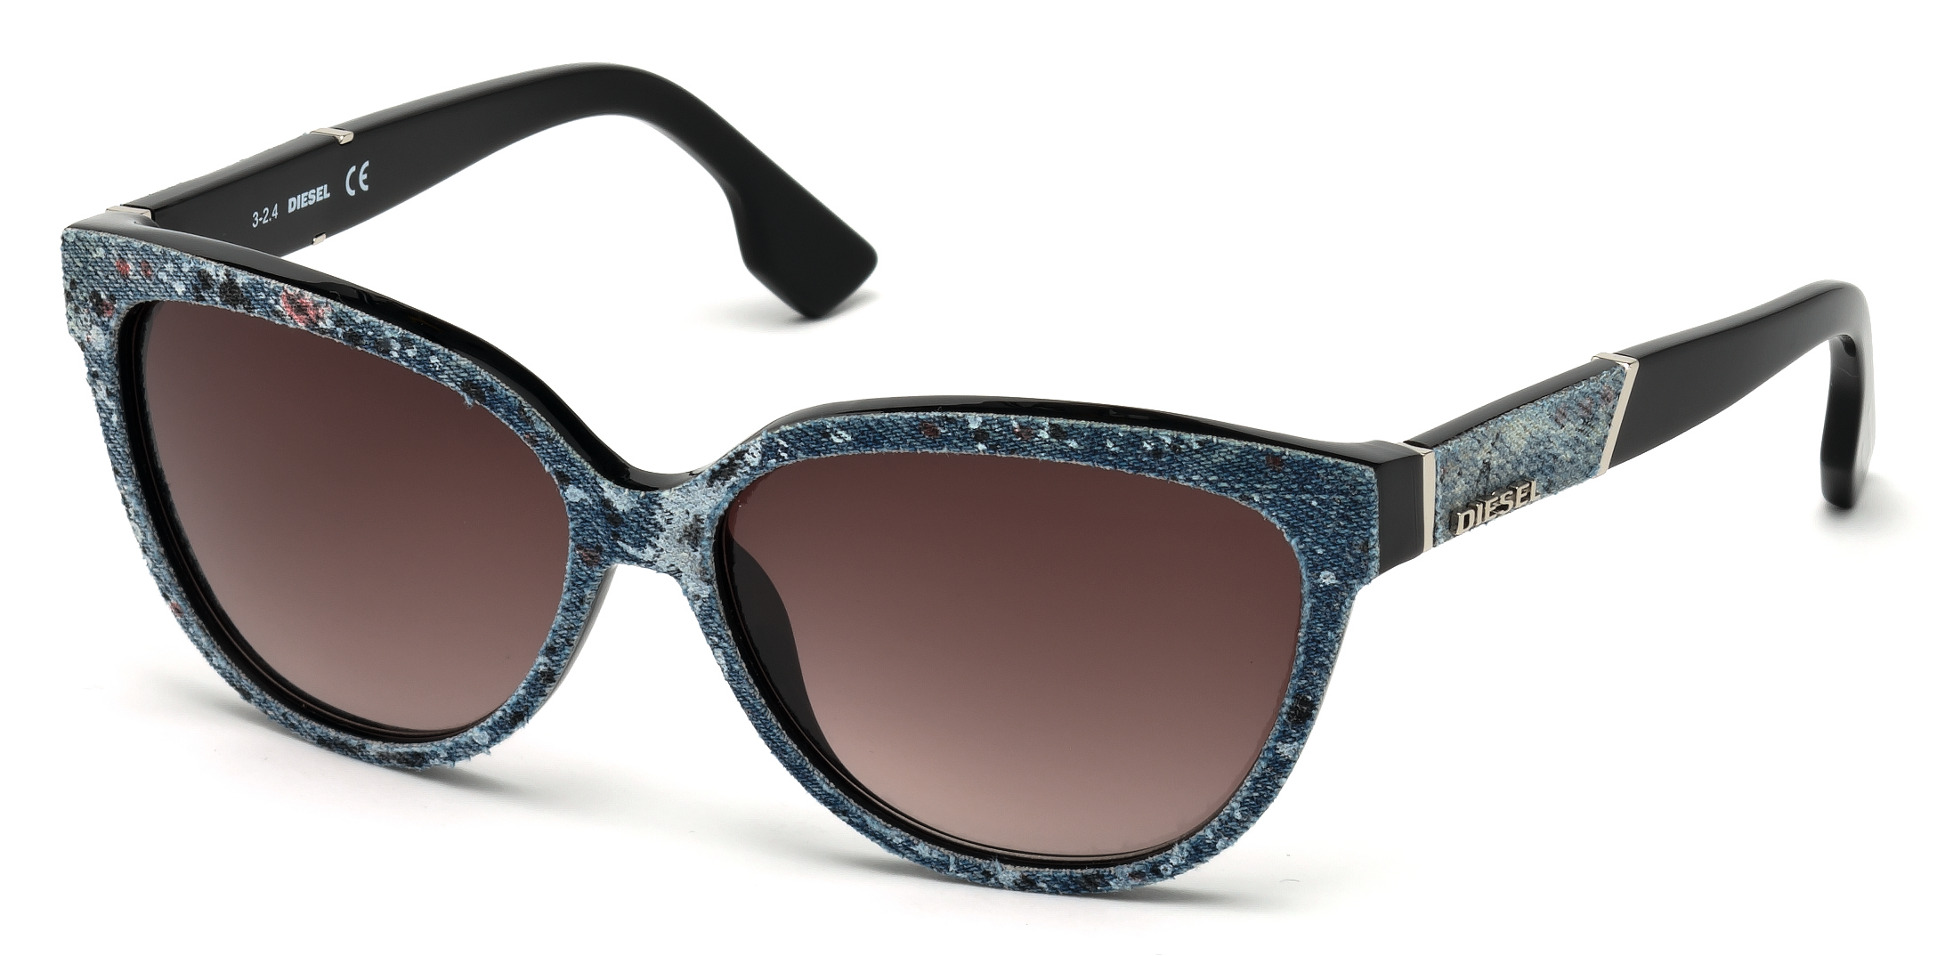 Marcolin Eyewear sunglasses Diesel FW 15 16 (2)